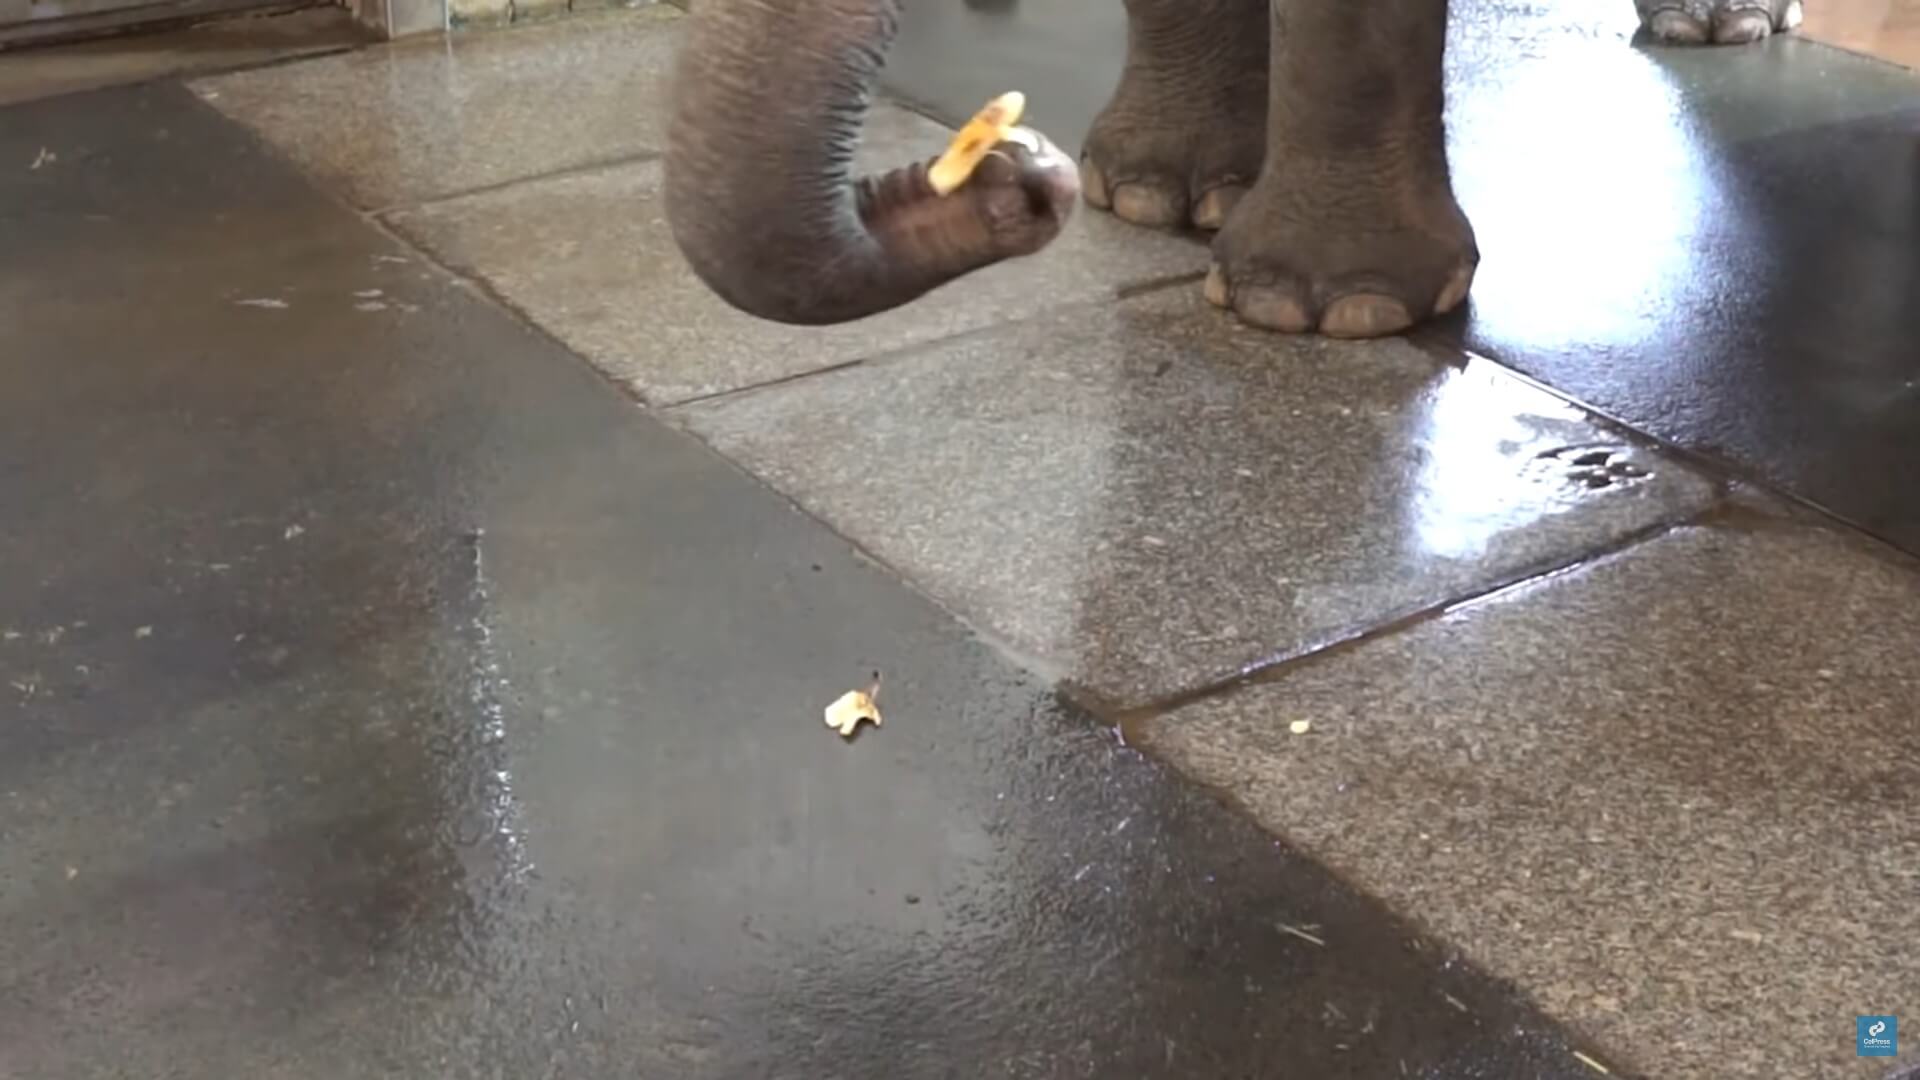 Pang pha peeling a banana